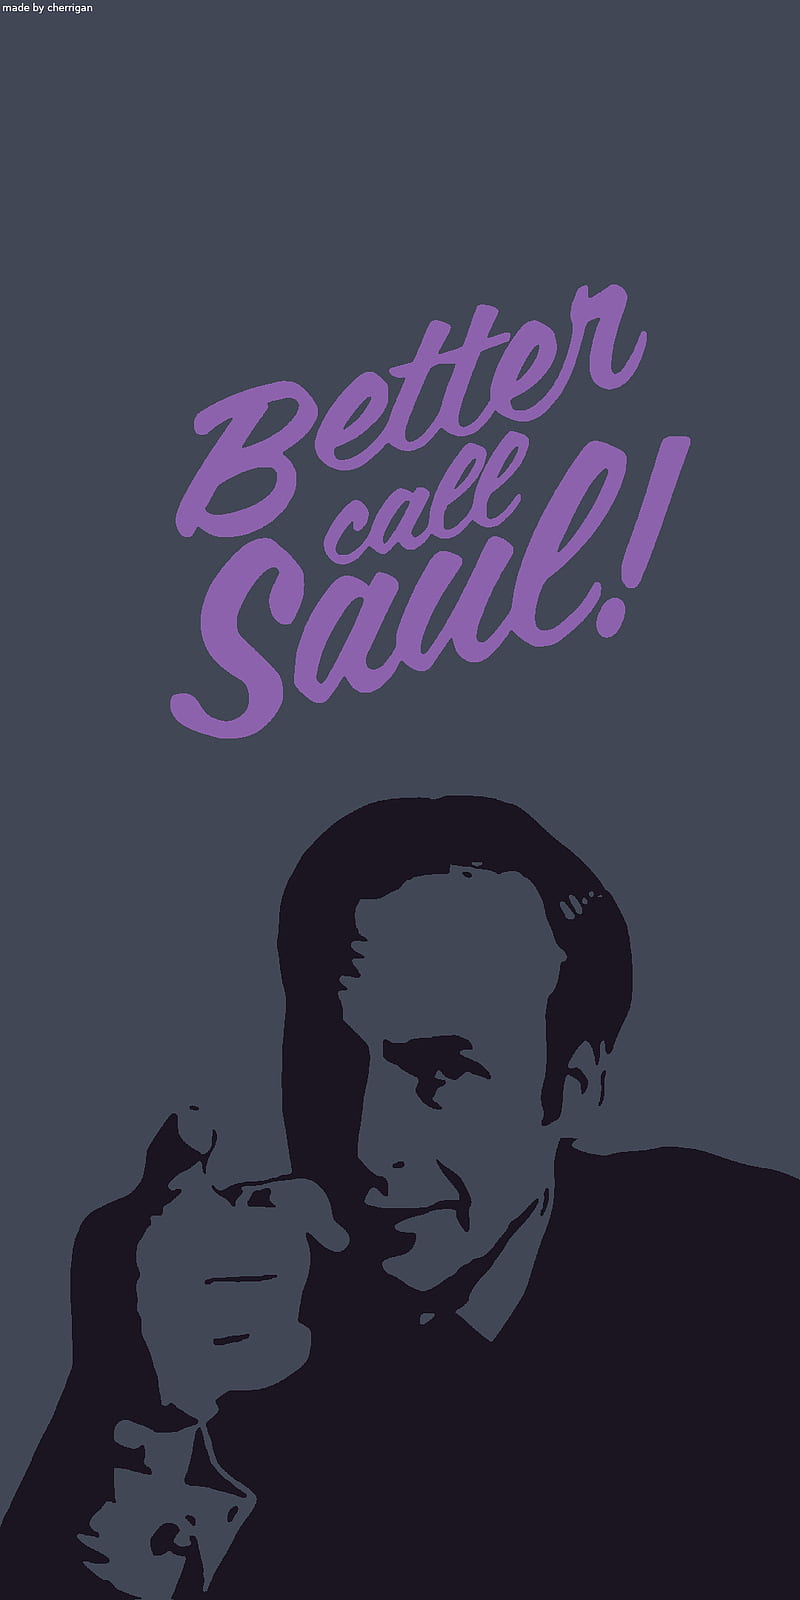 Did Breaking Bad Storyline Ruin Better Call Saul?